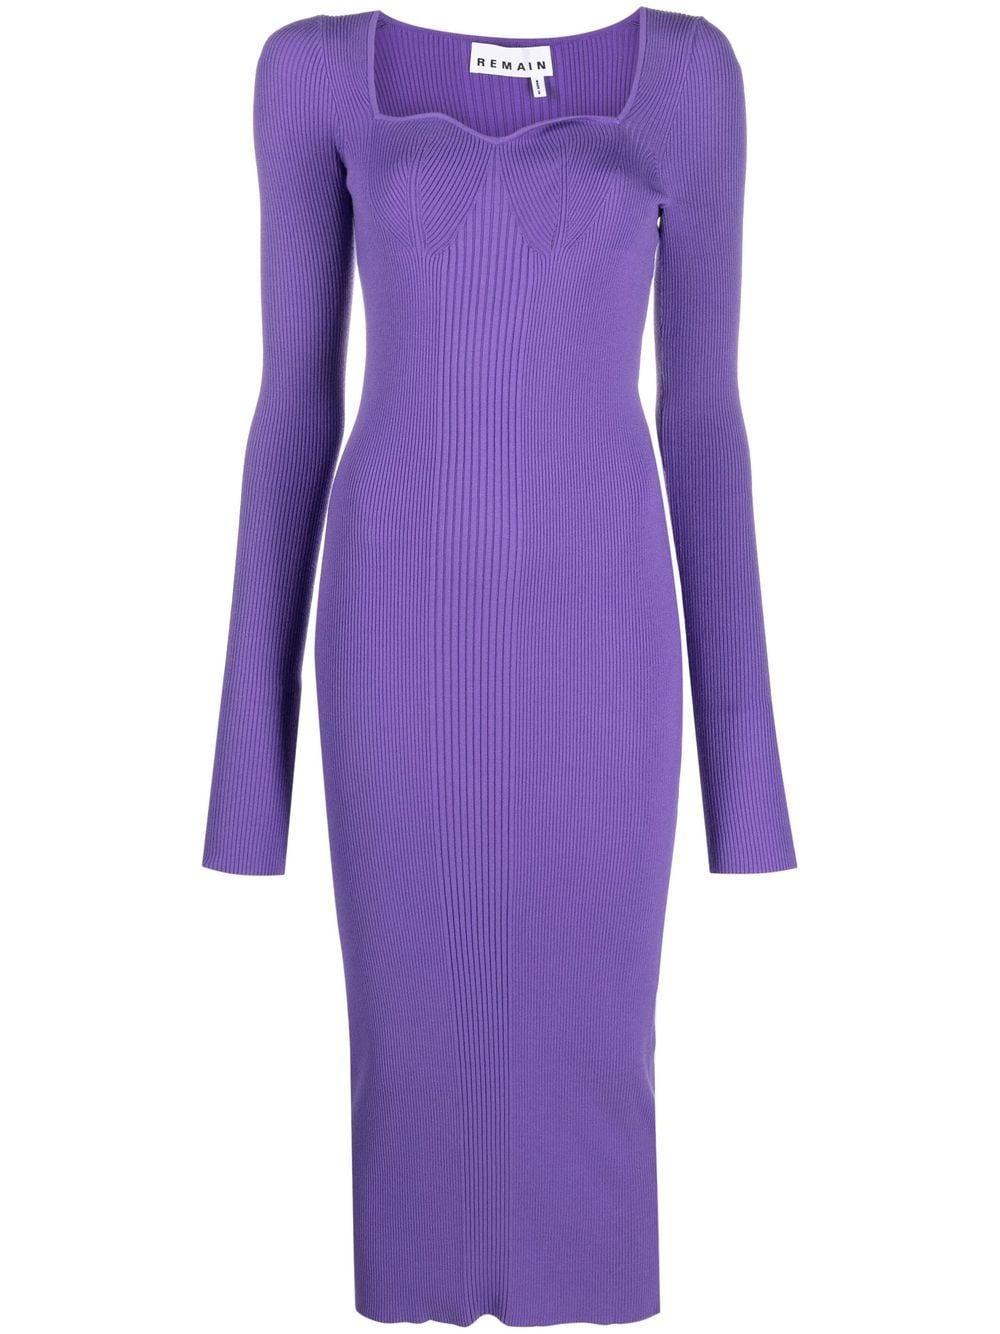 Remain Dense Ribbed-knit Midi Dress in Purple | Lyst